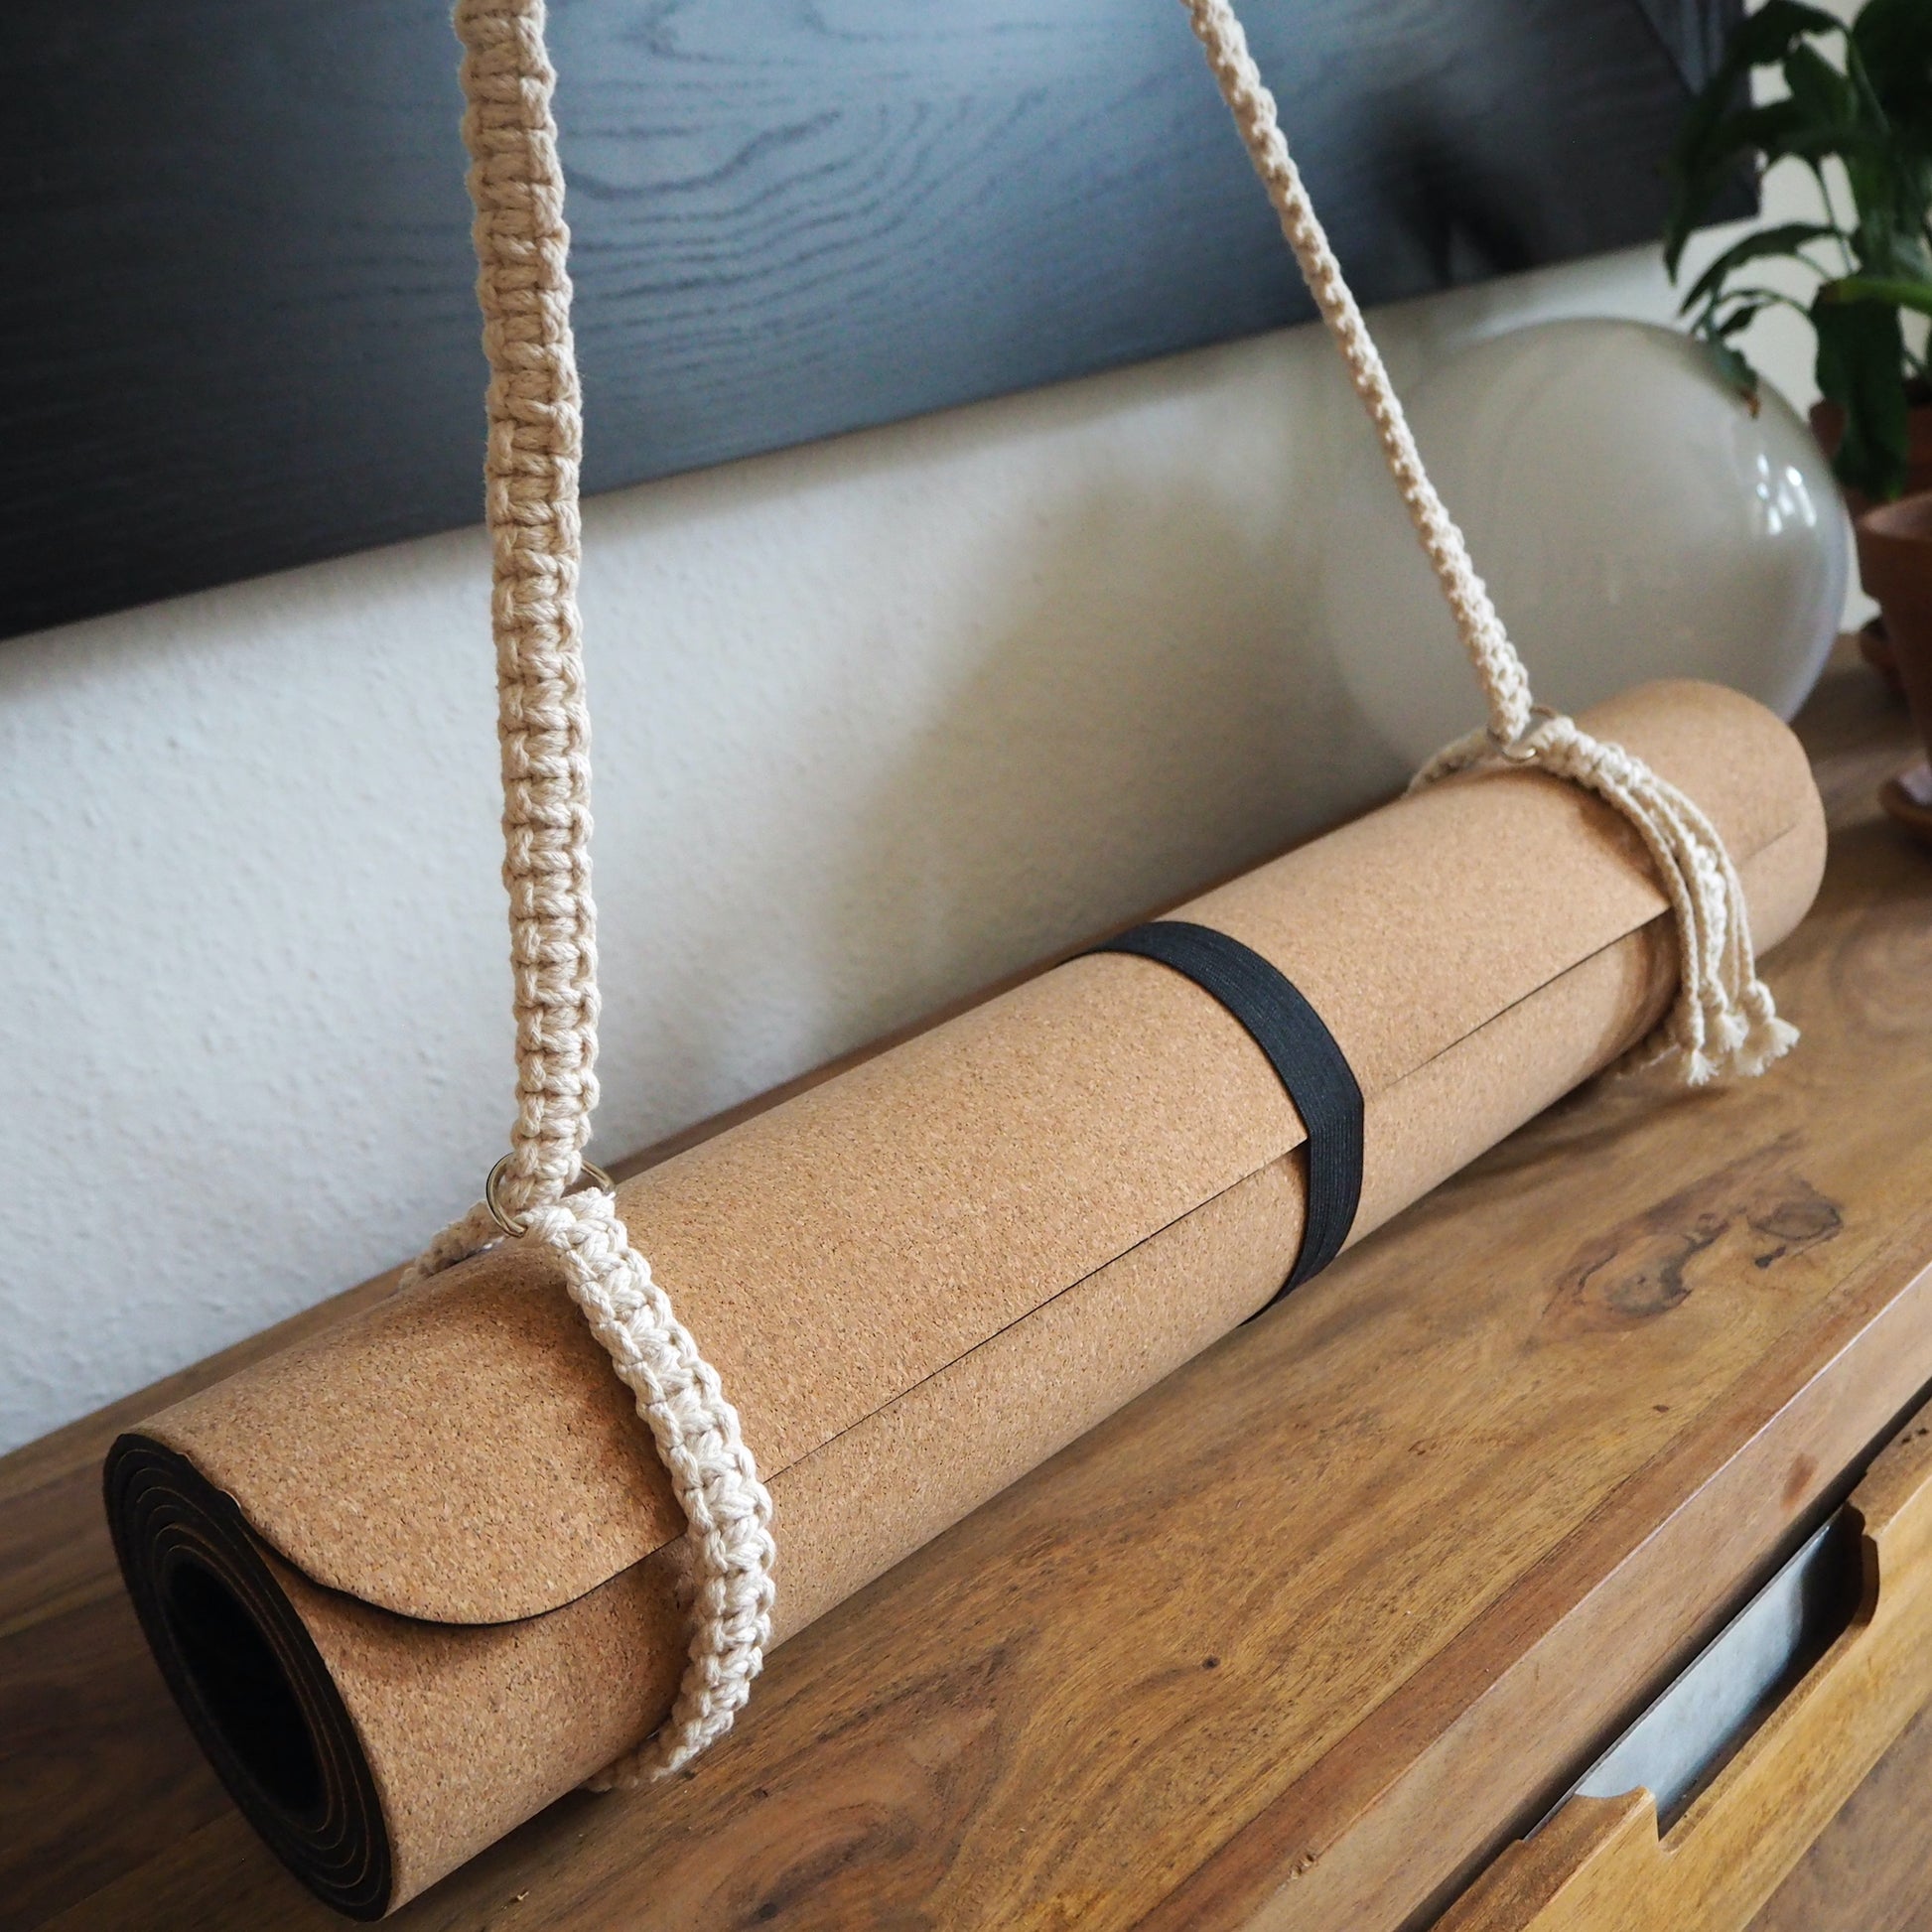 Crochet Yoga Mat Strap 